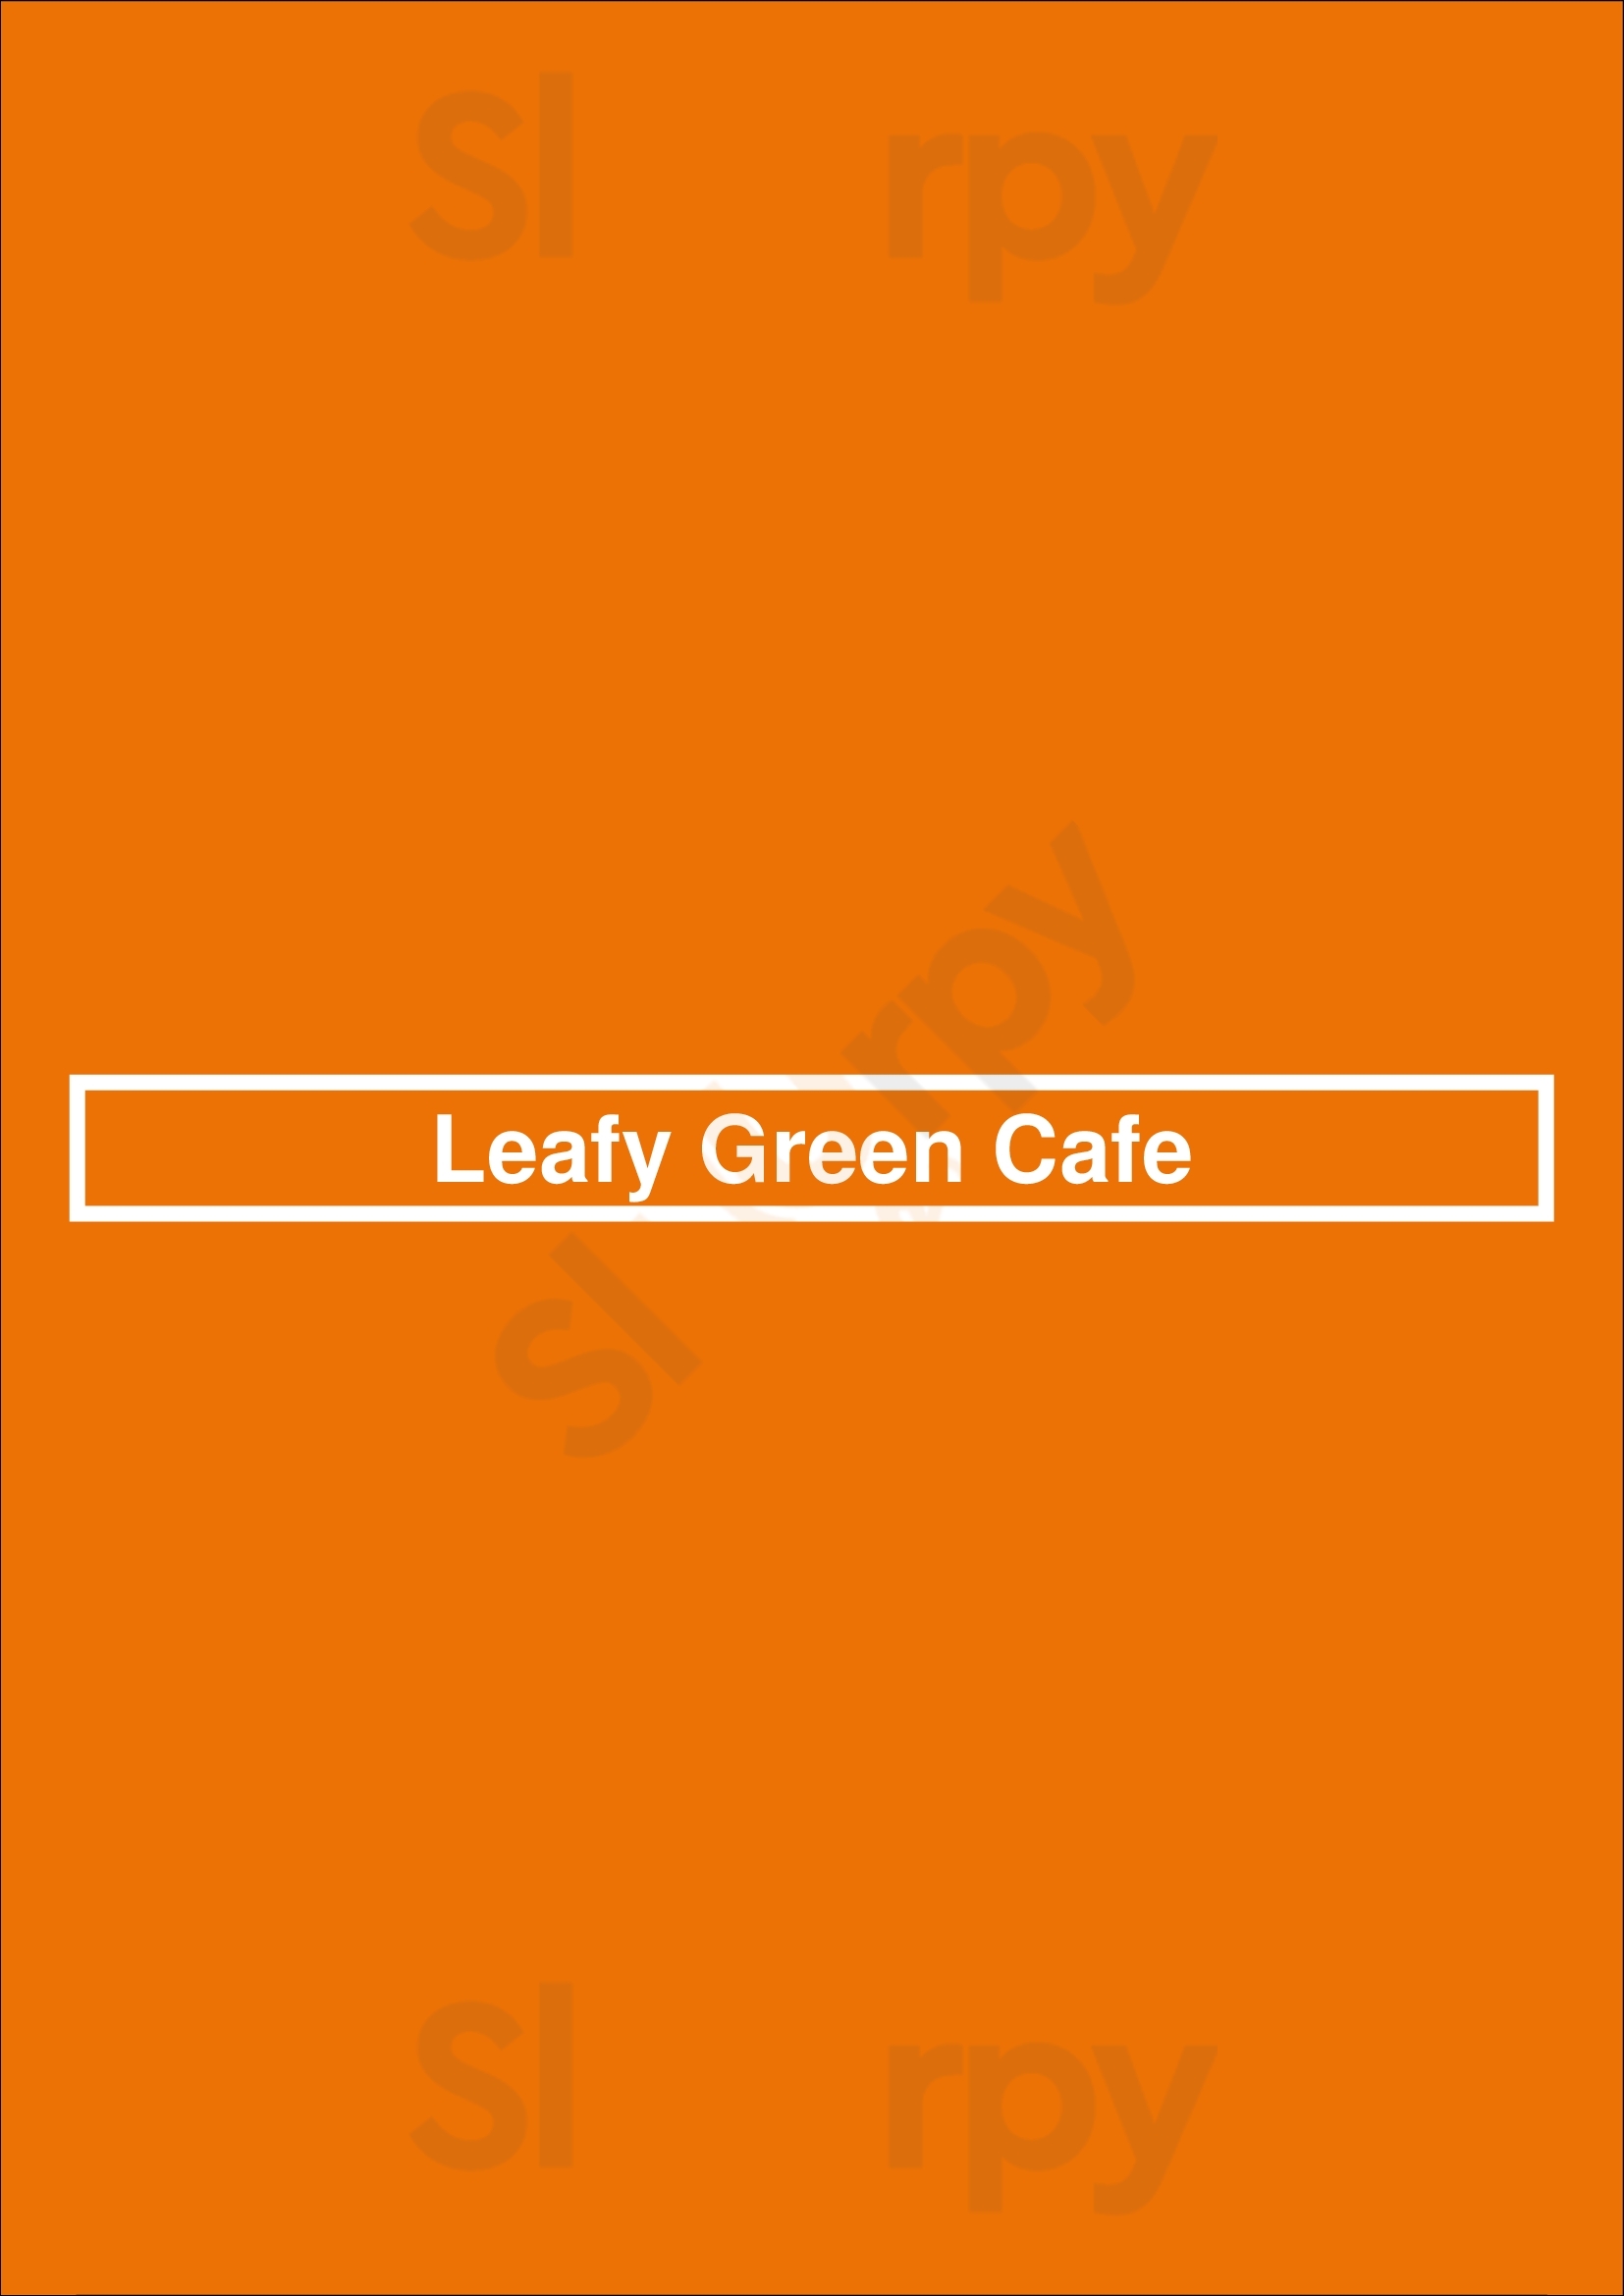 Leafy Green Cafe St. Petersburg Menu - 1